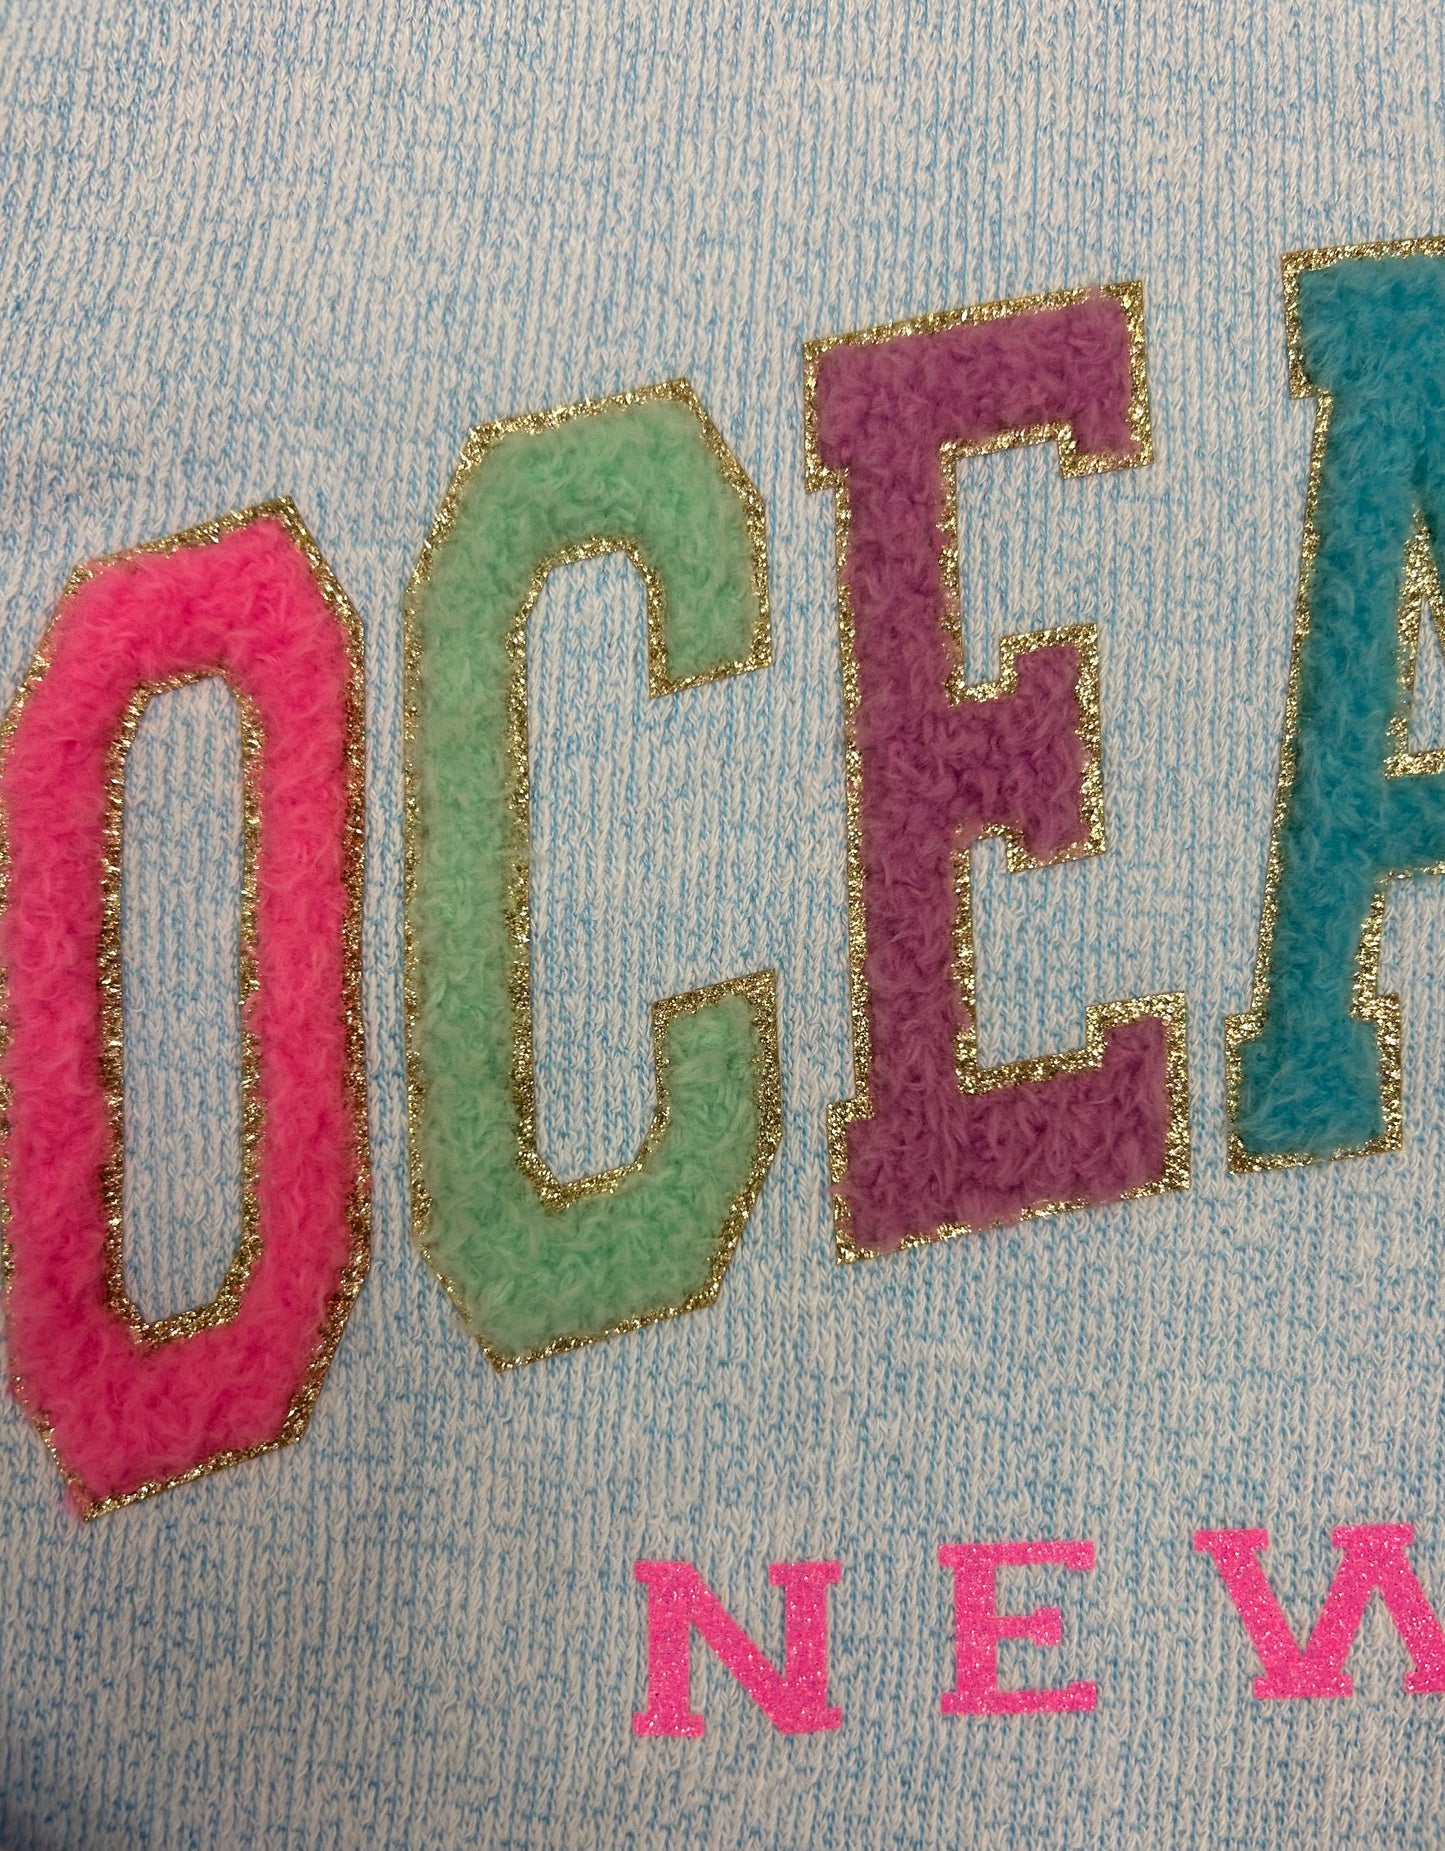 Ocean City Puffy Letter Sweatshirt